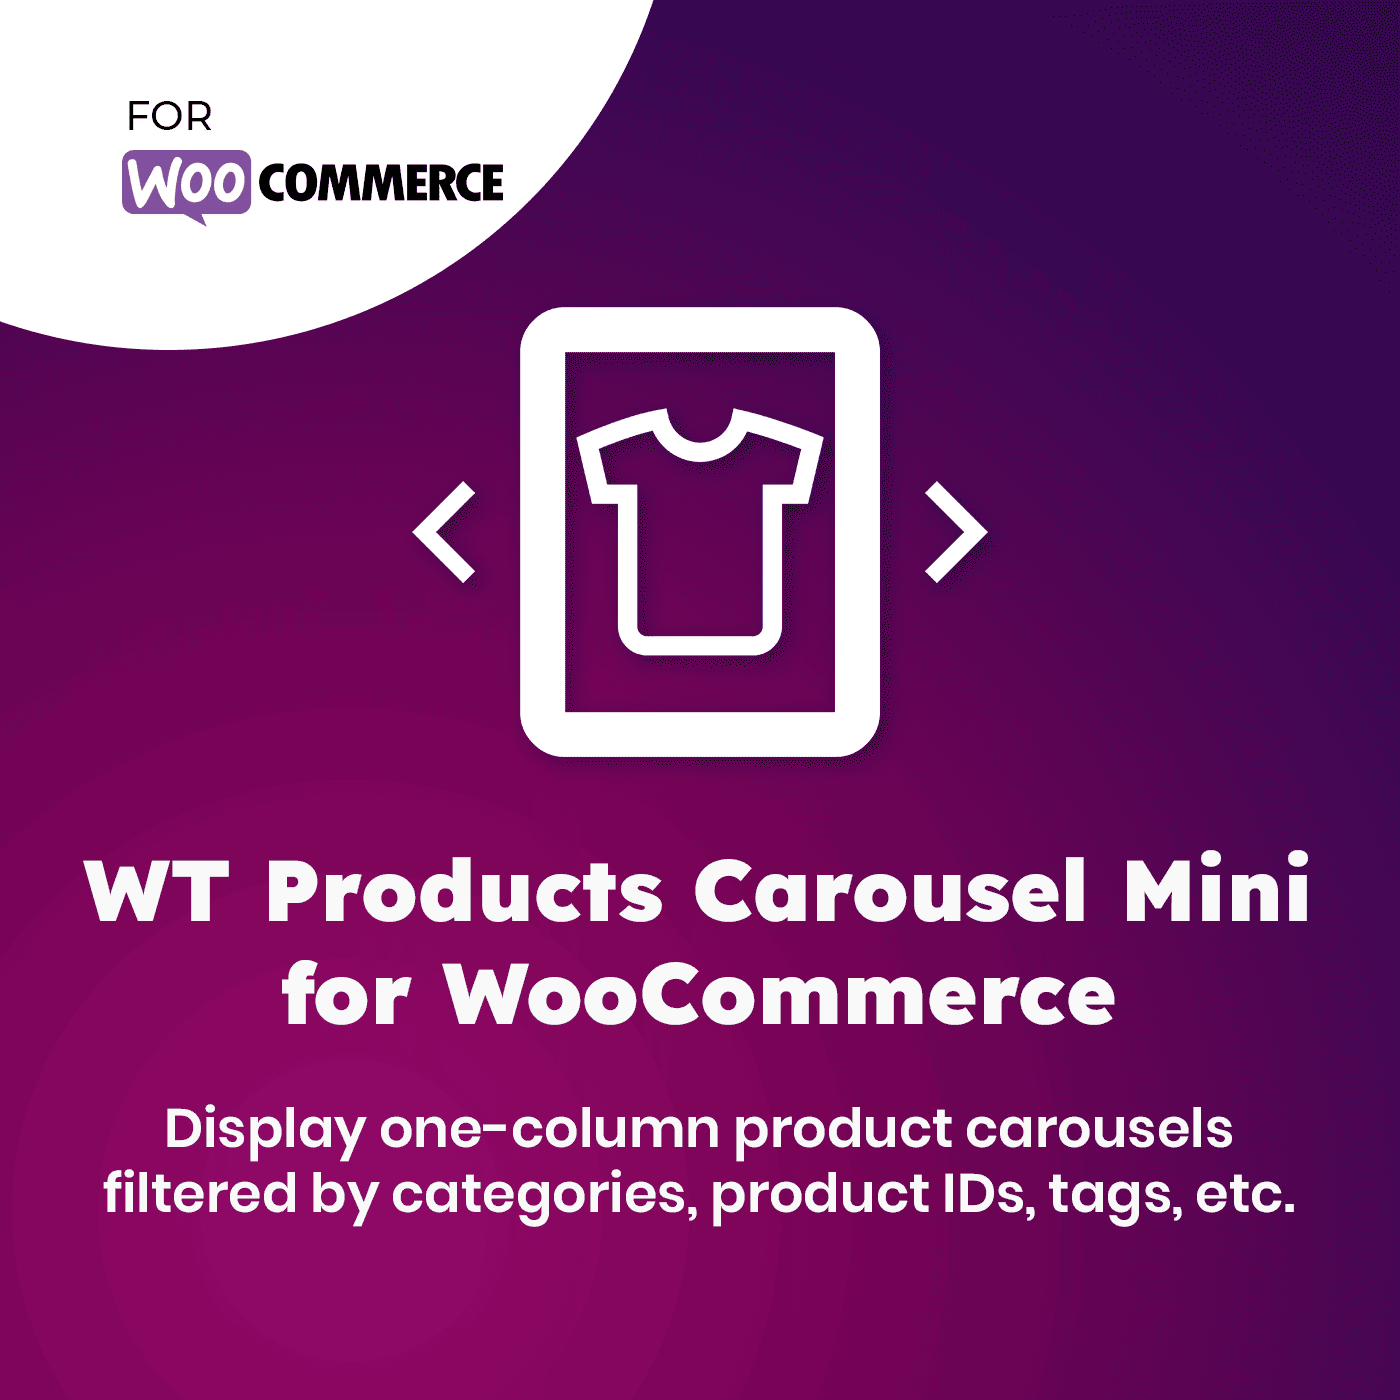 WT Products Carousel Mini for WooCommerce - WordPress Plugin for WooCommerce